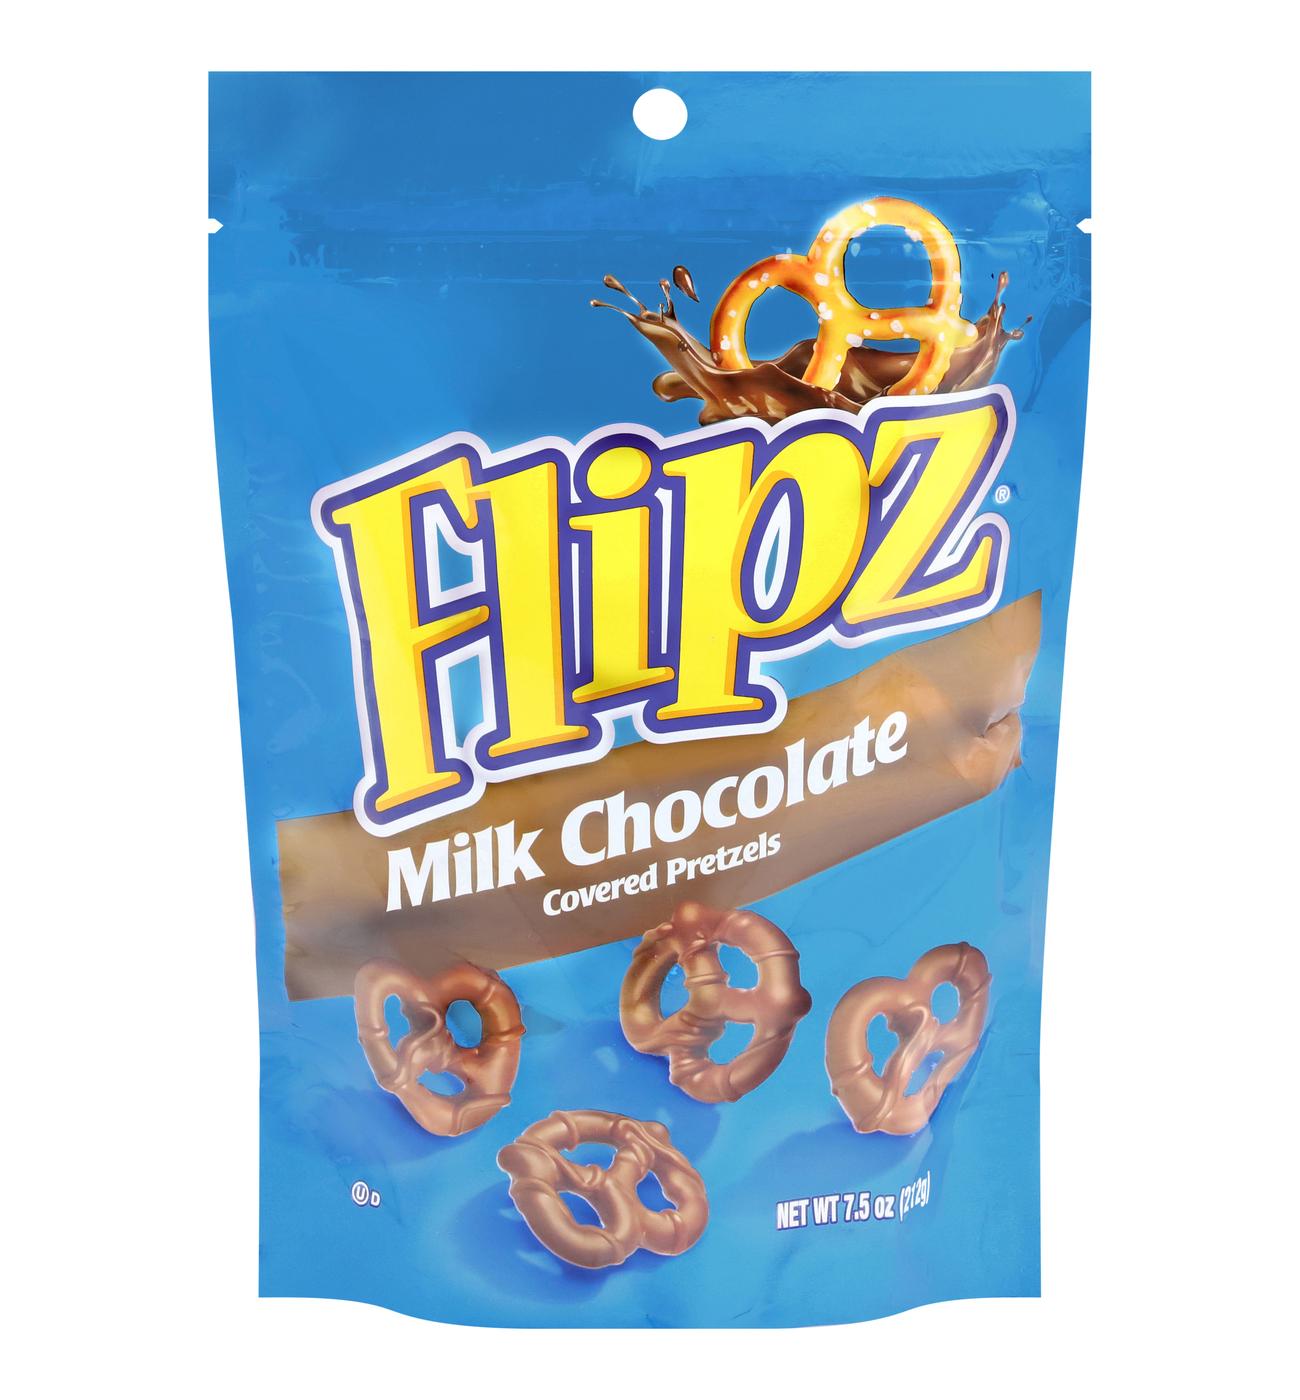 Flipz Milk Chocolate Covered Pretzels; image 1 of 2